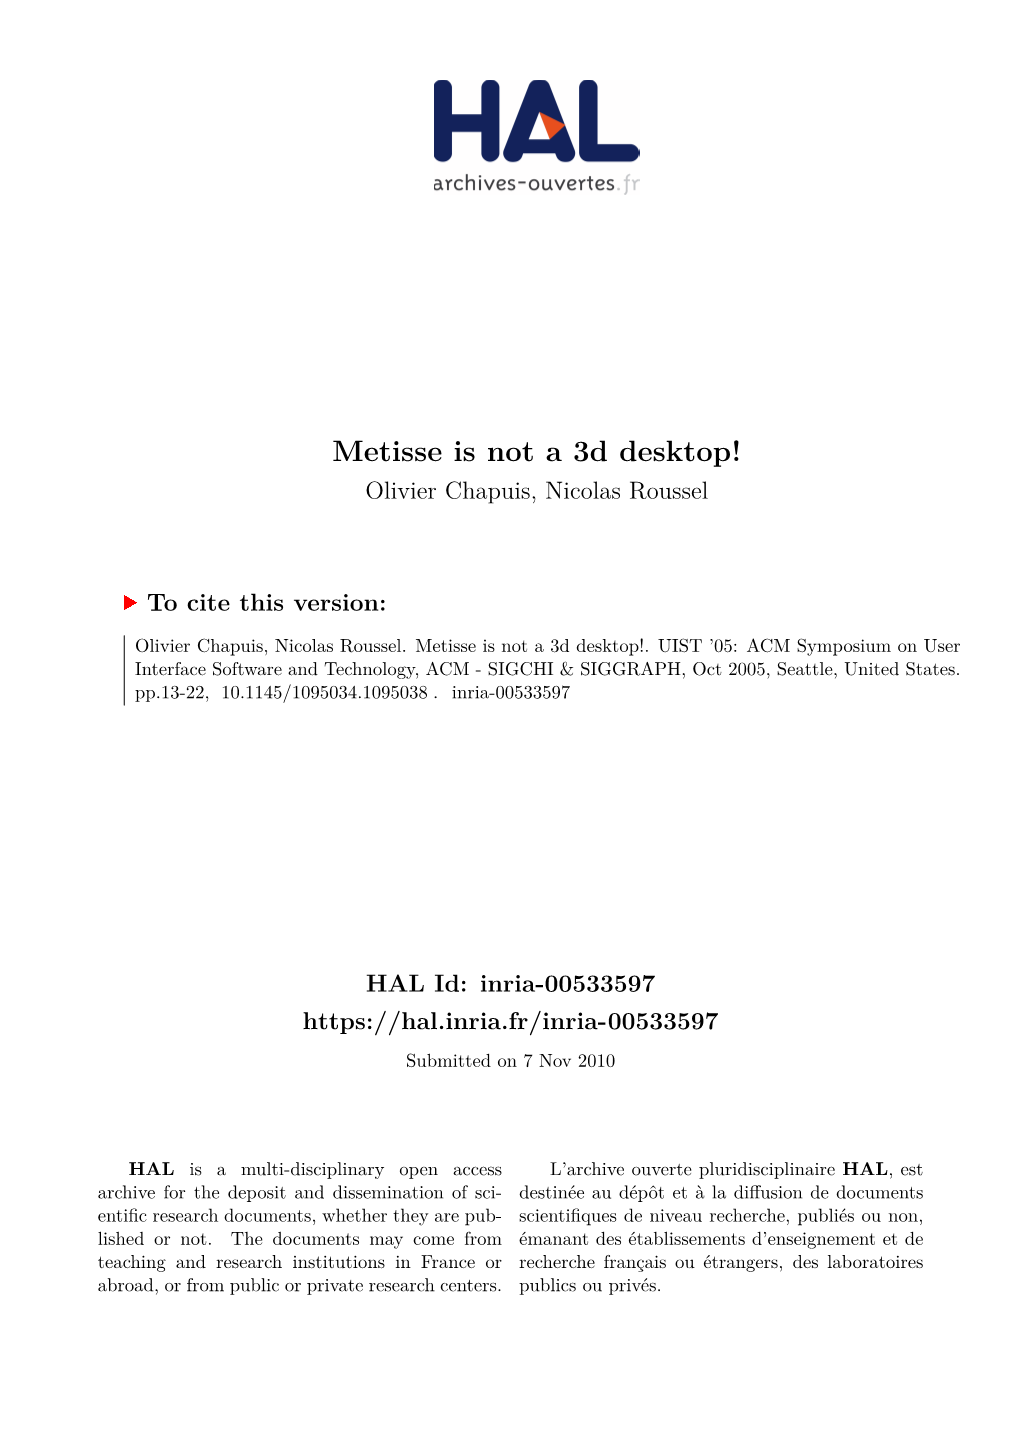 Metisse Is Not a 3D Desktop! Olivier Chapuis, Nicolas Roussel